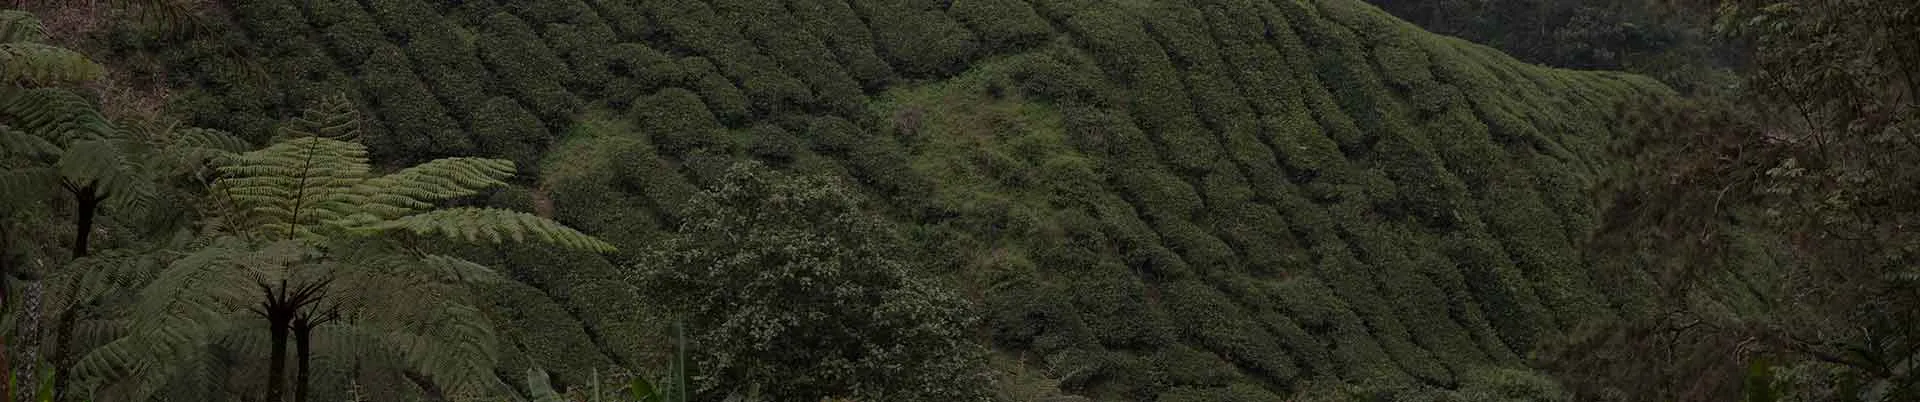 Sri Lanka tea fields